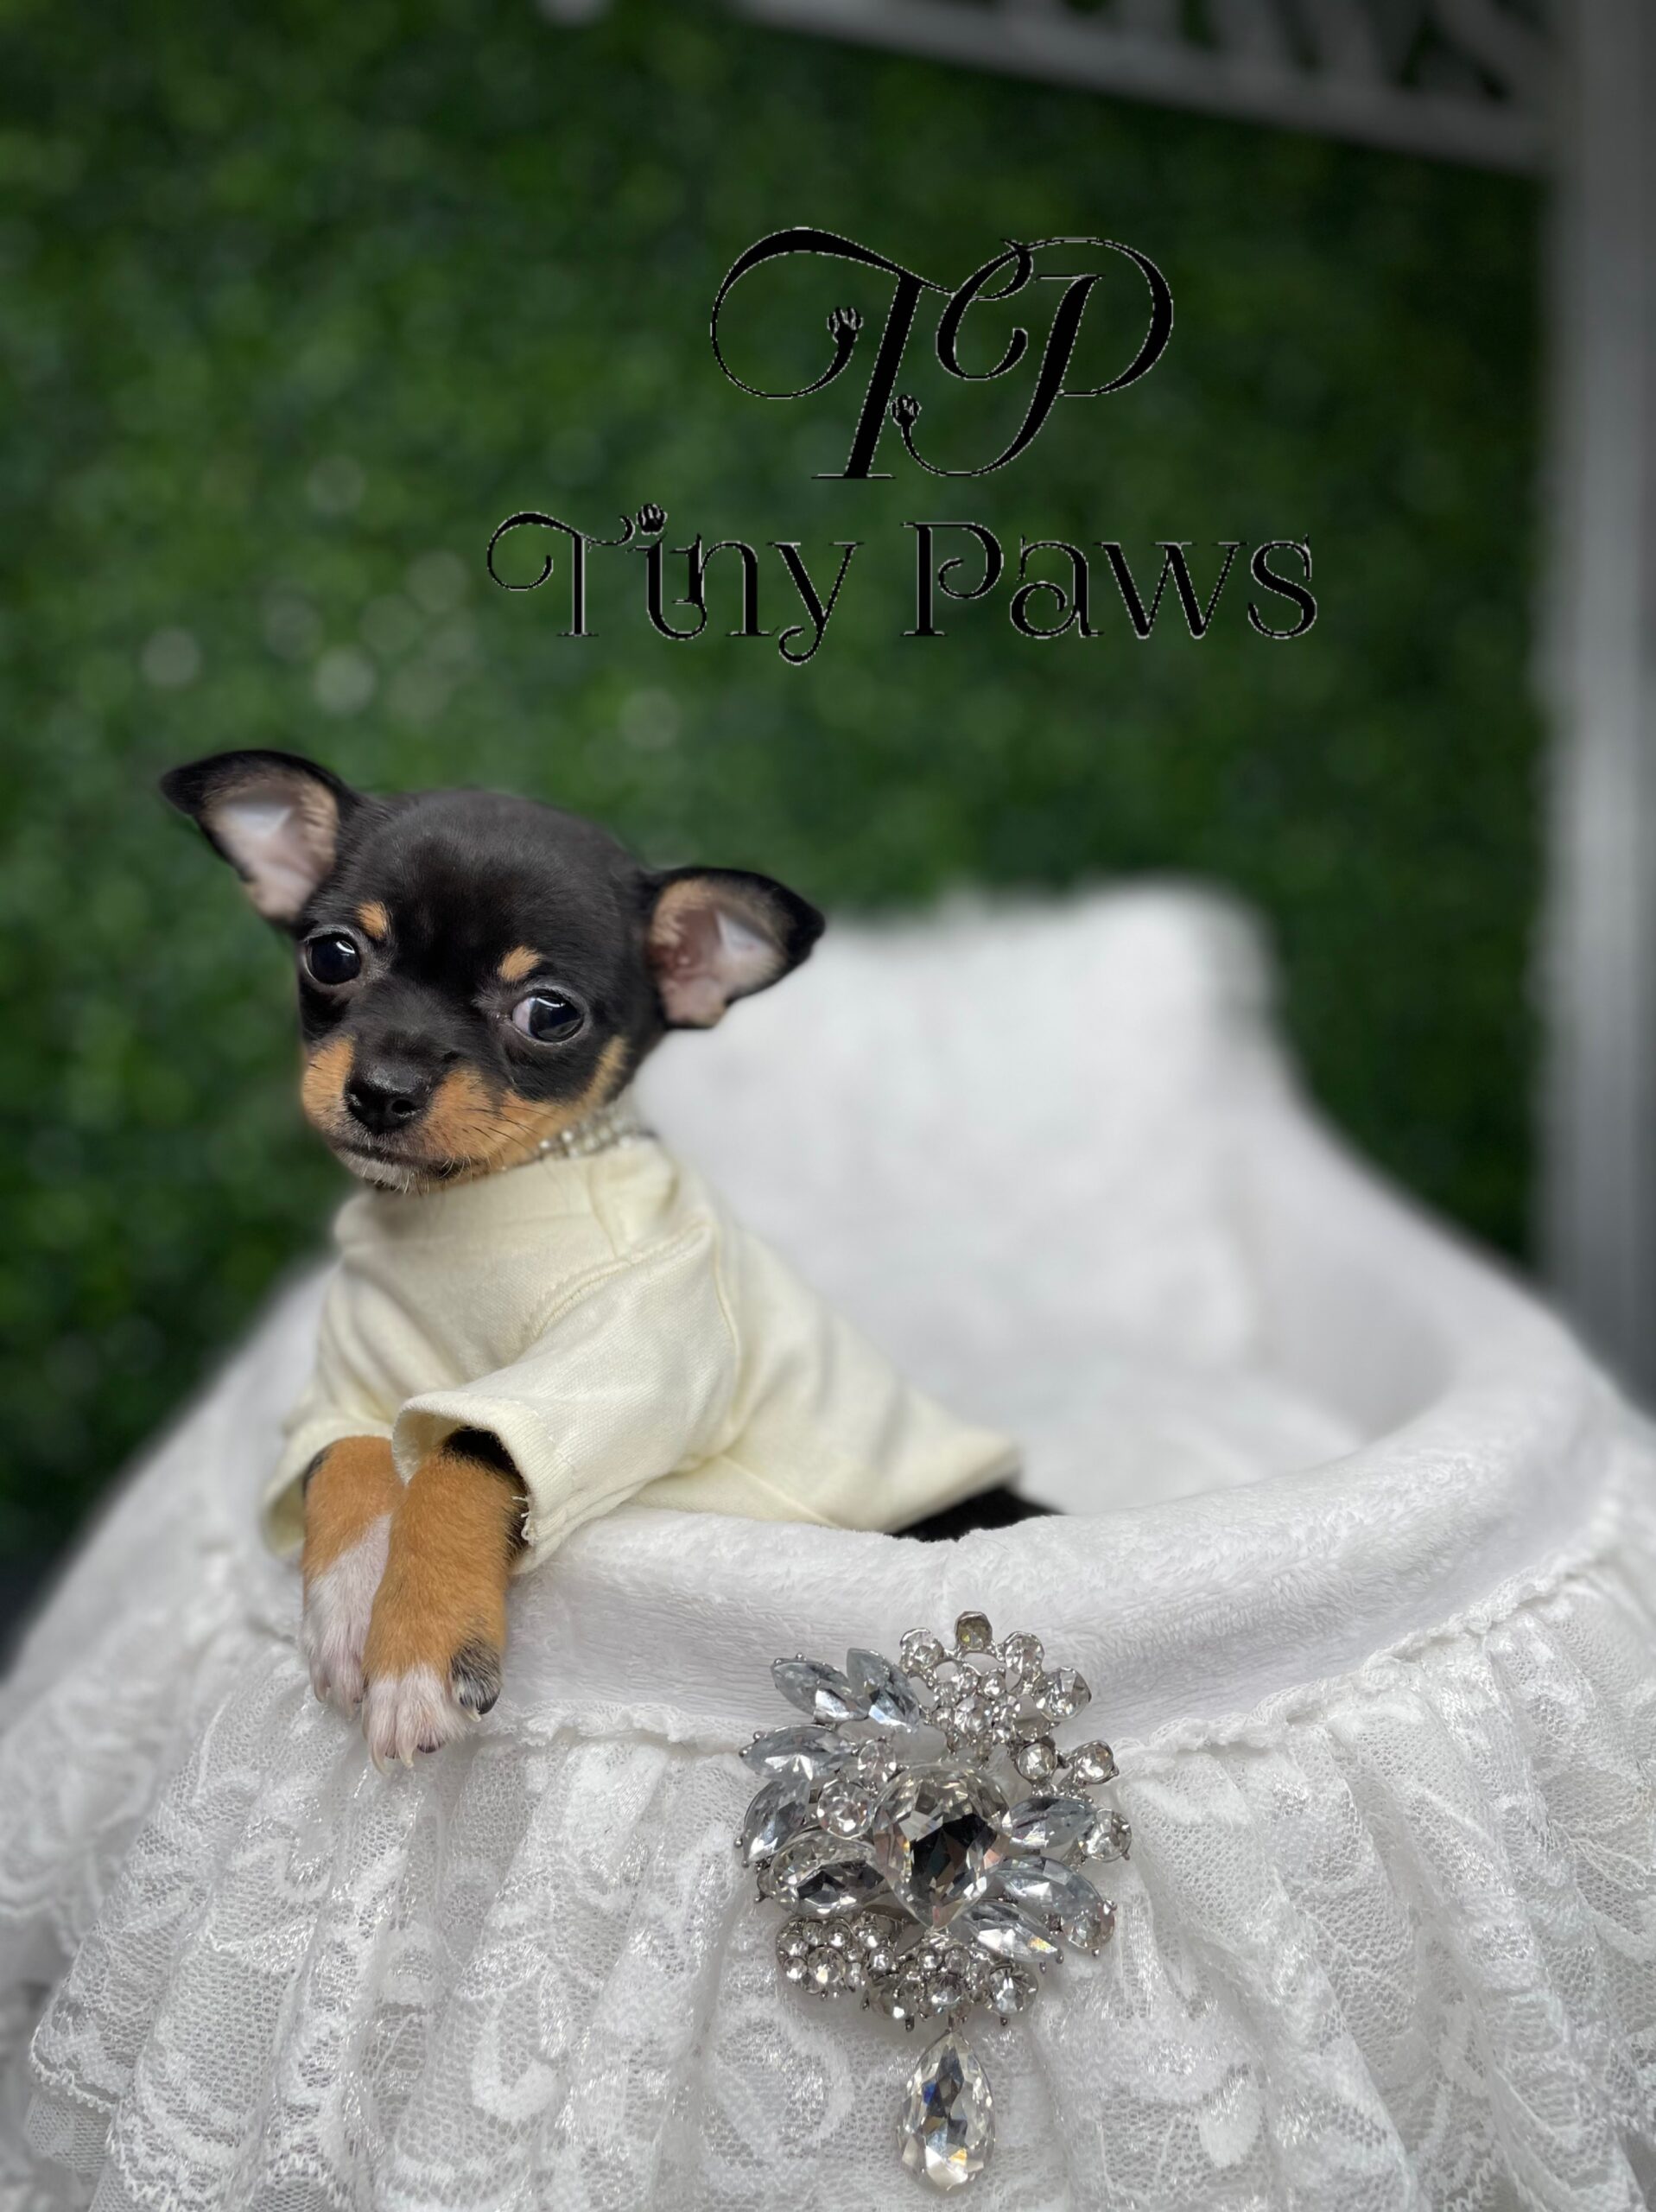 Tiny Teacup Black & Tan Chihuahua For Sale